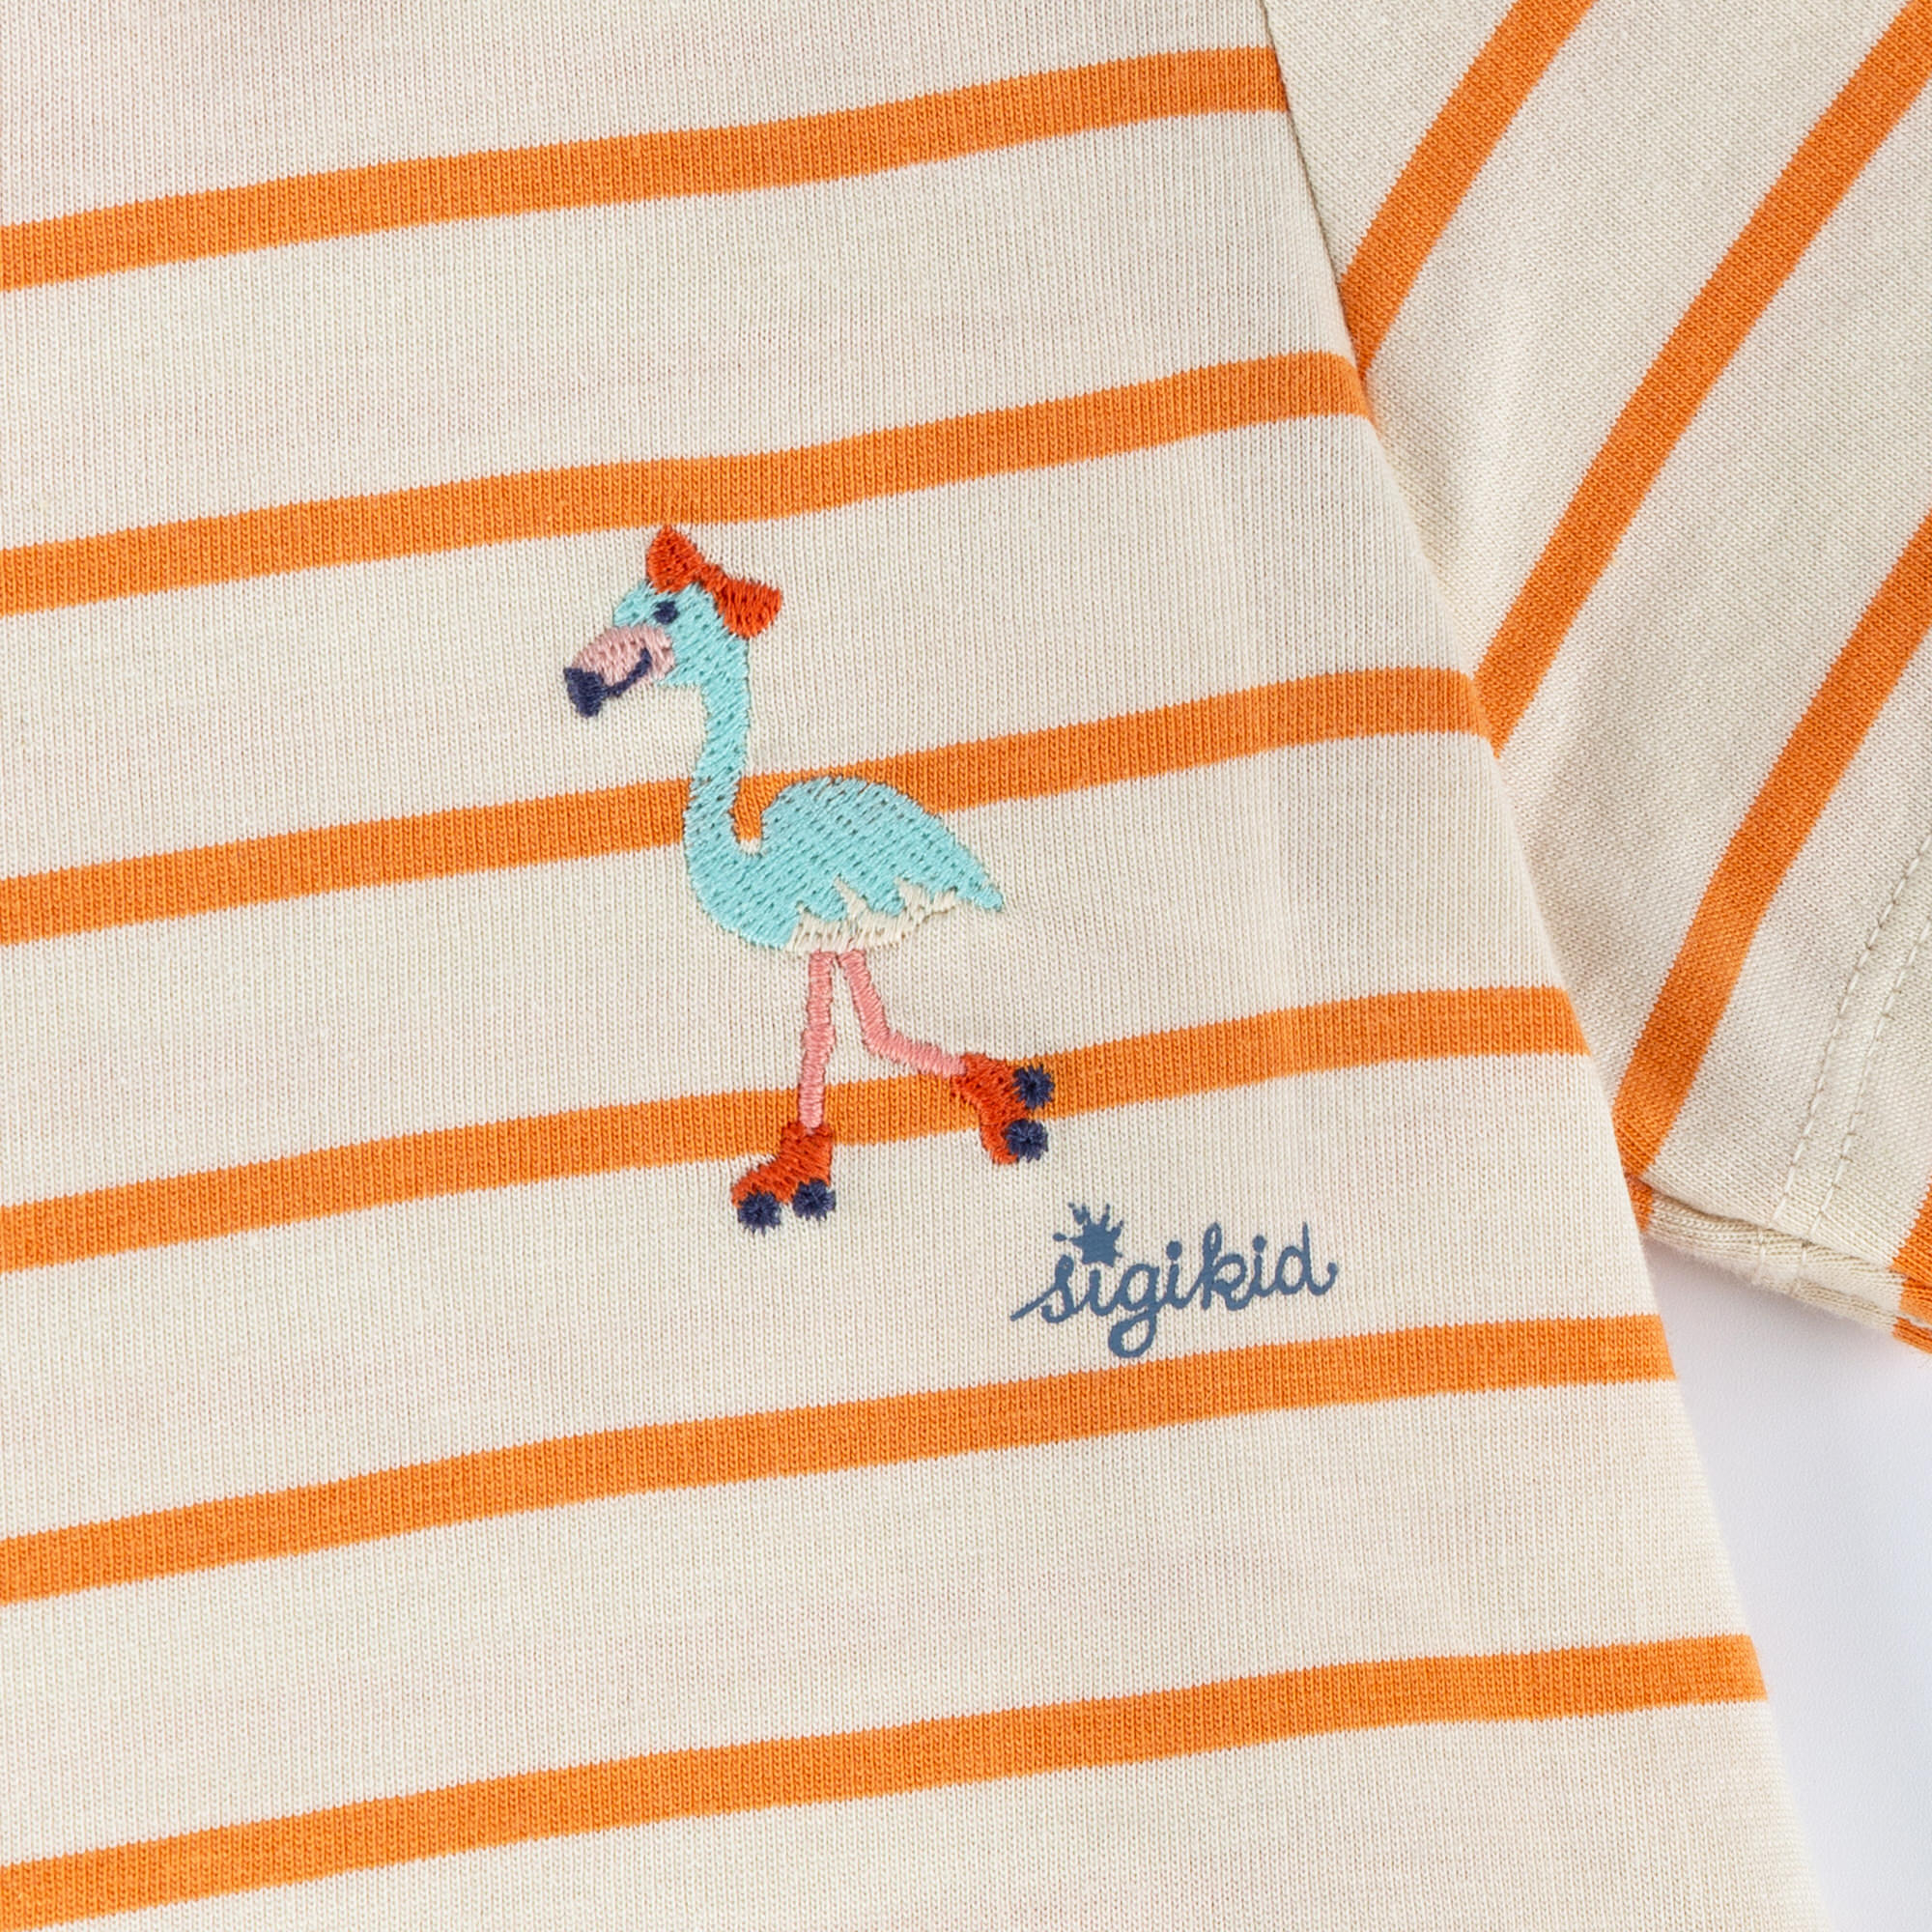 Kinder Ringel T-Shirt Flamingo, orange-weiß